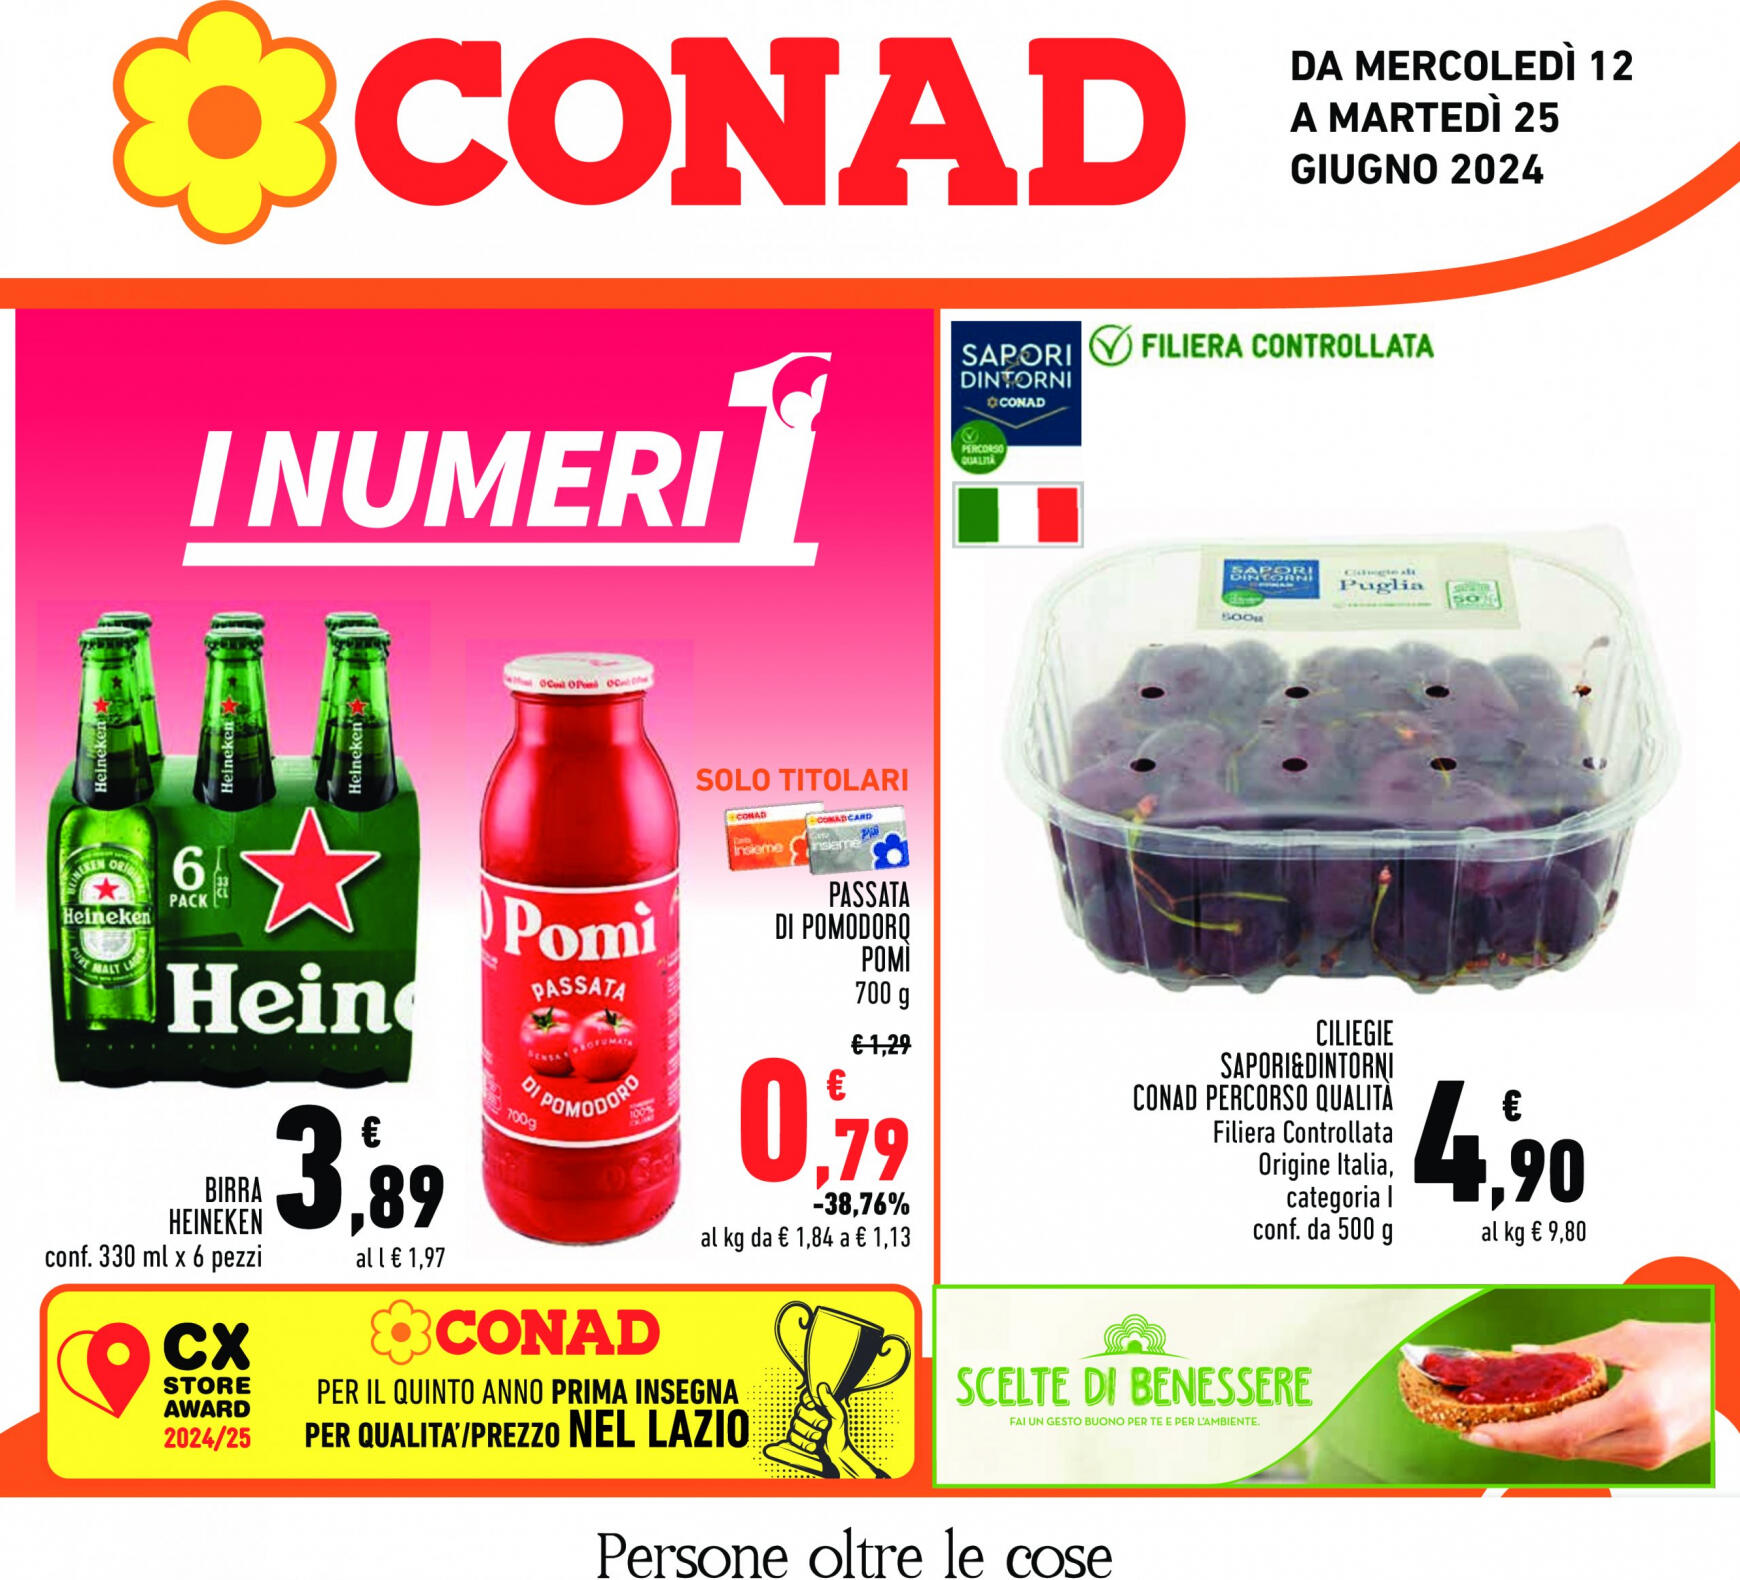 conad - Nuovo volantino Conad 12.06. - 25.06. - page: 1